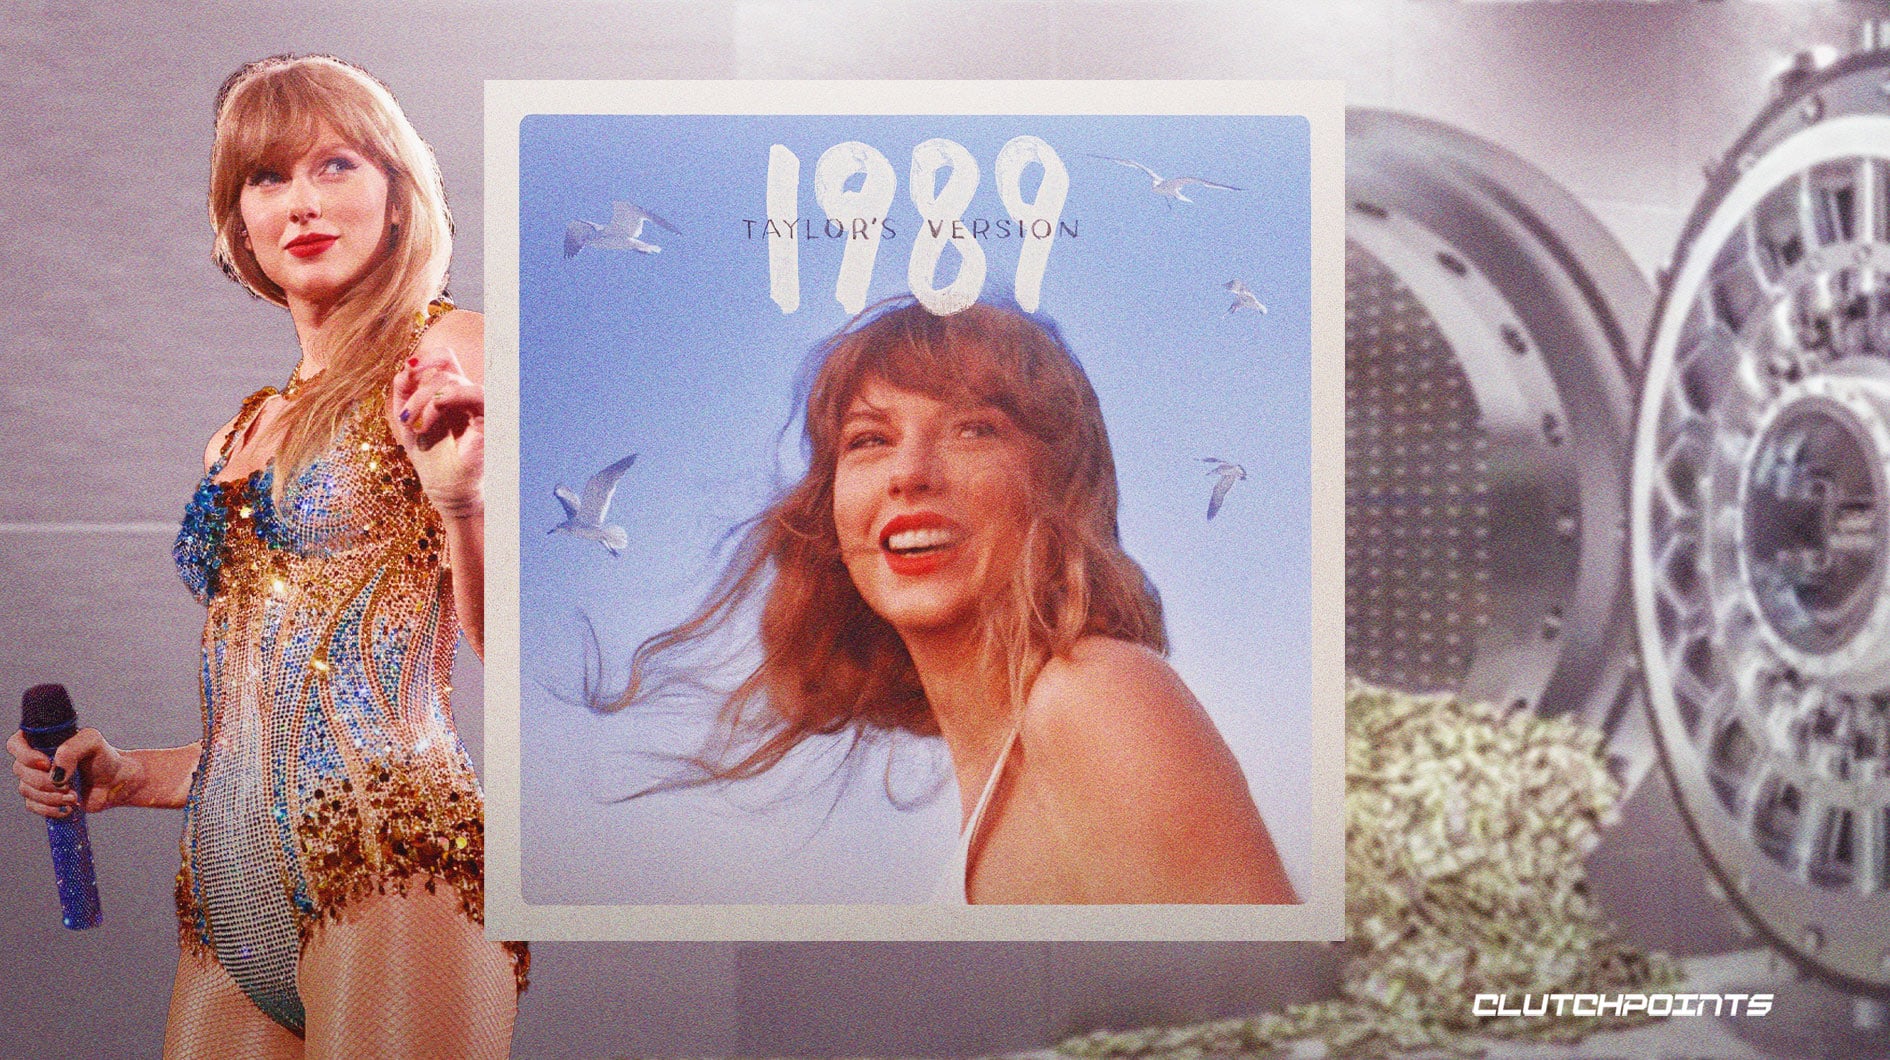 Taylor Swift, 1989 (Taylor's Version) vault